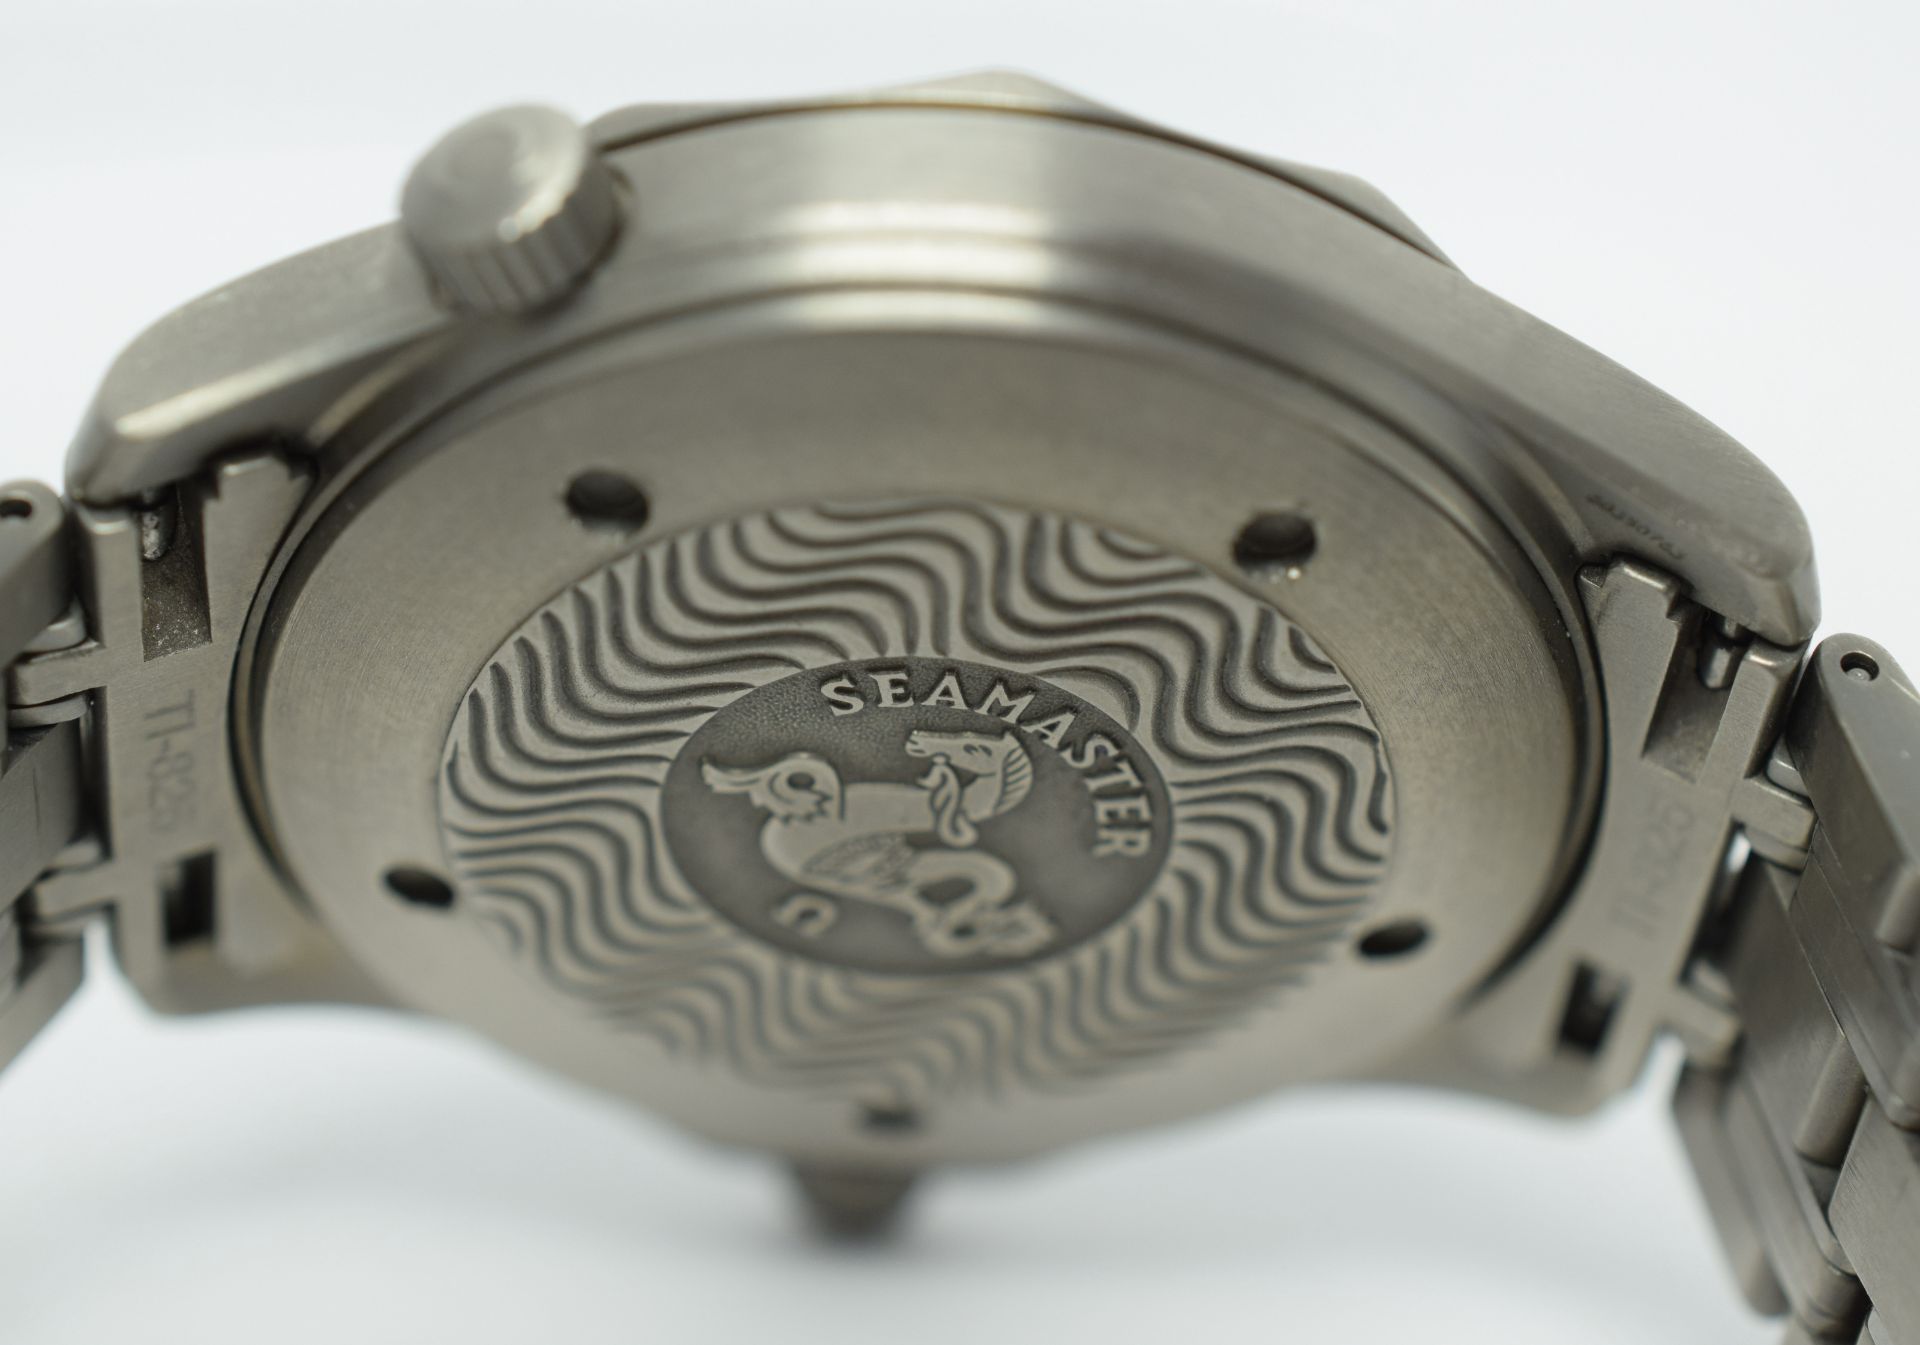 Omega Seamaster Professional Chronometer 300mts/1000ft In Titanium On Titanium Bracelet - Image 6 of 10